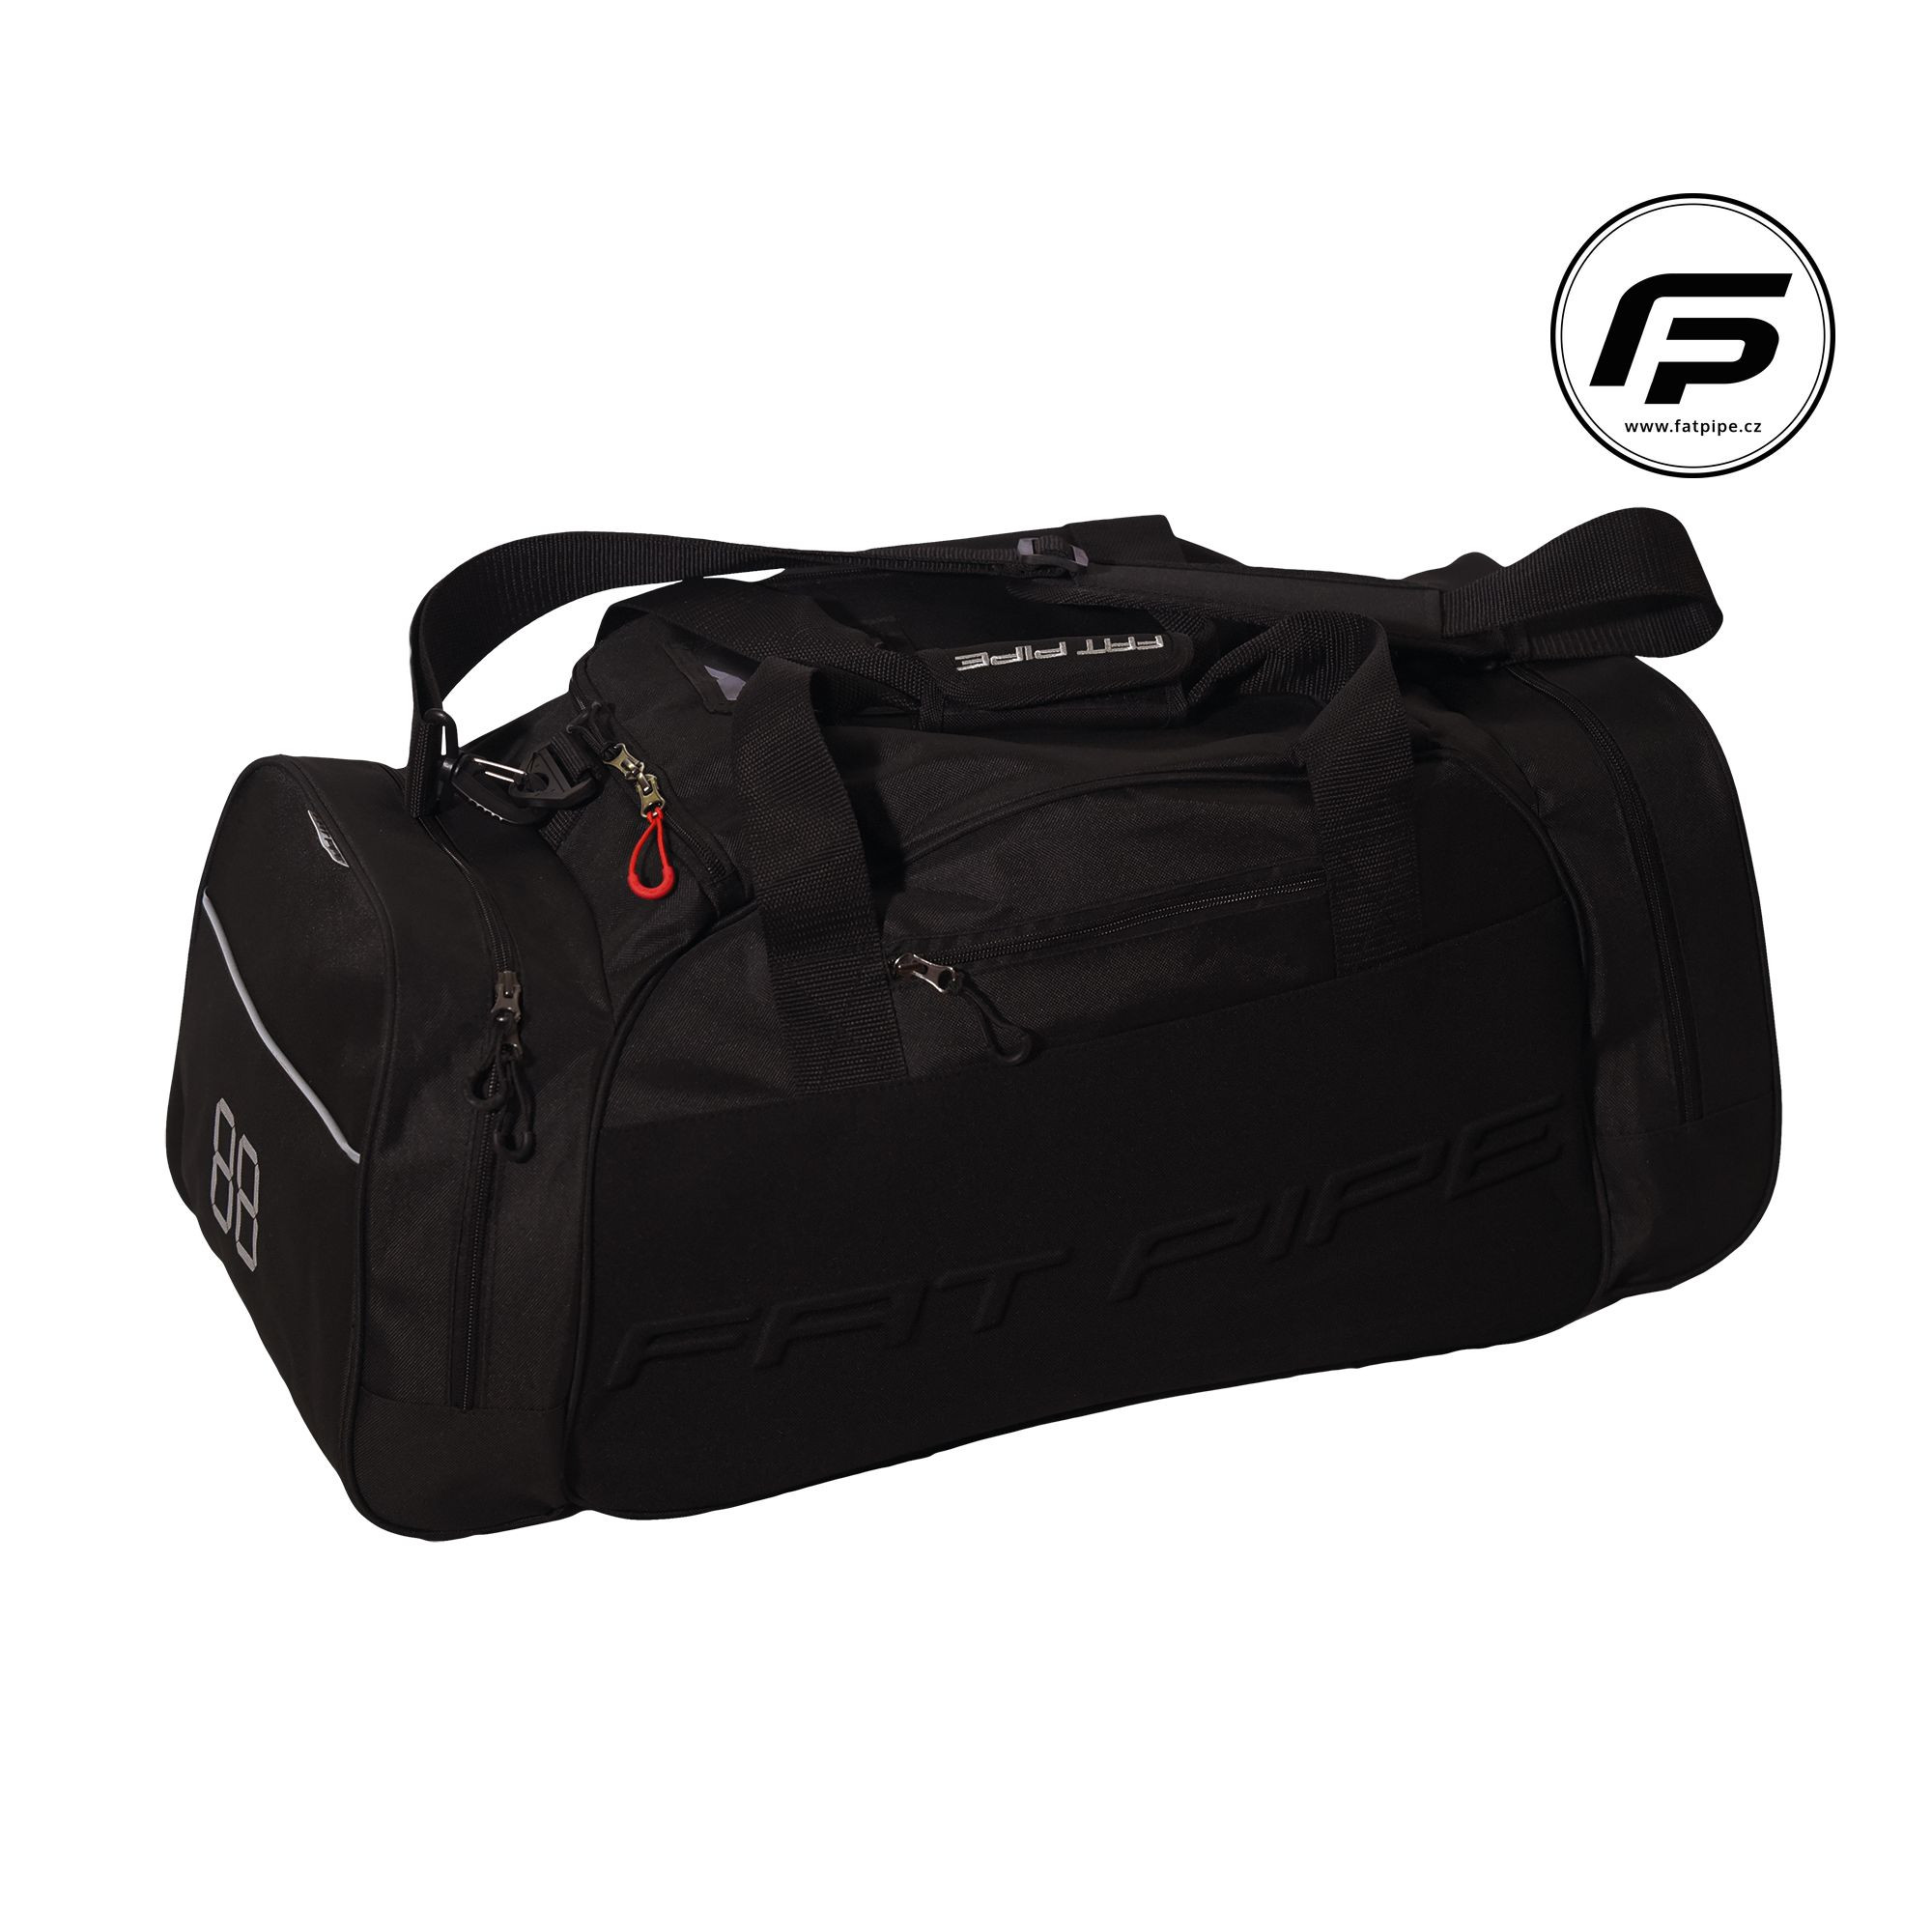 Fatpipe Lux Equipment Bag